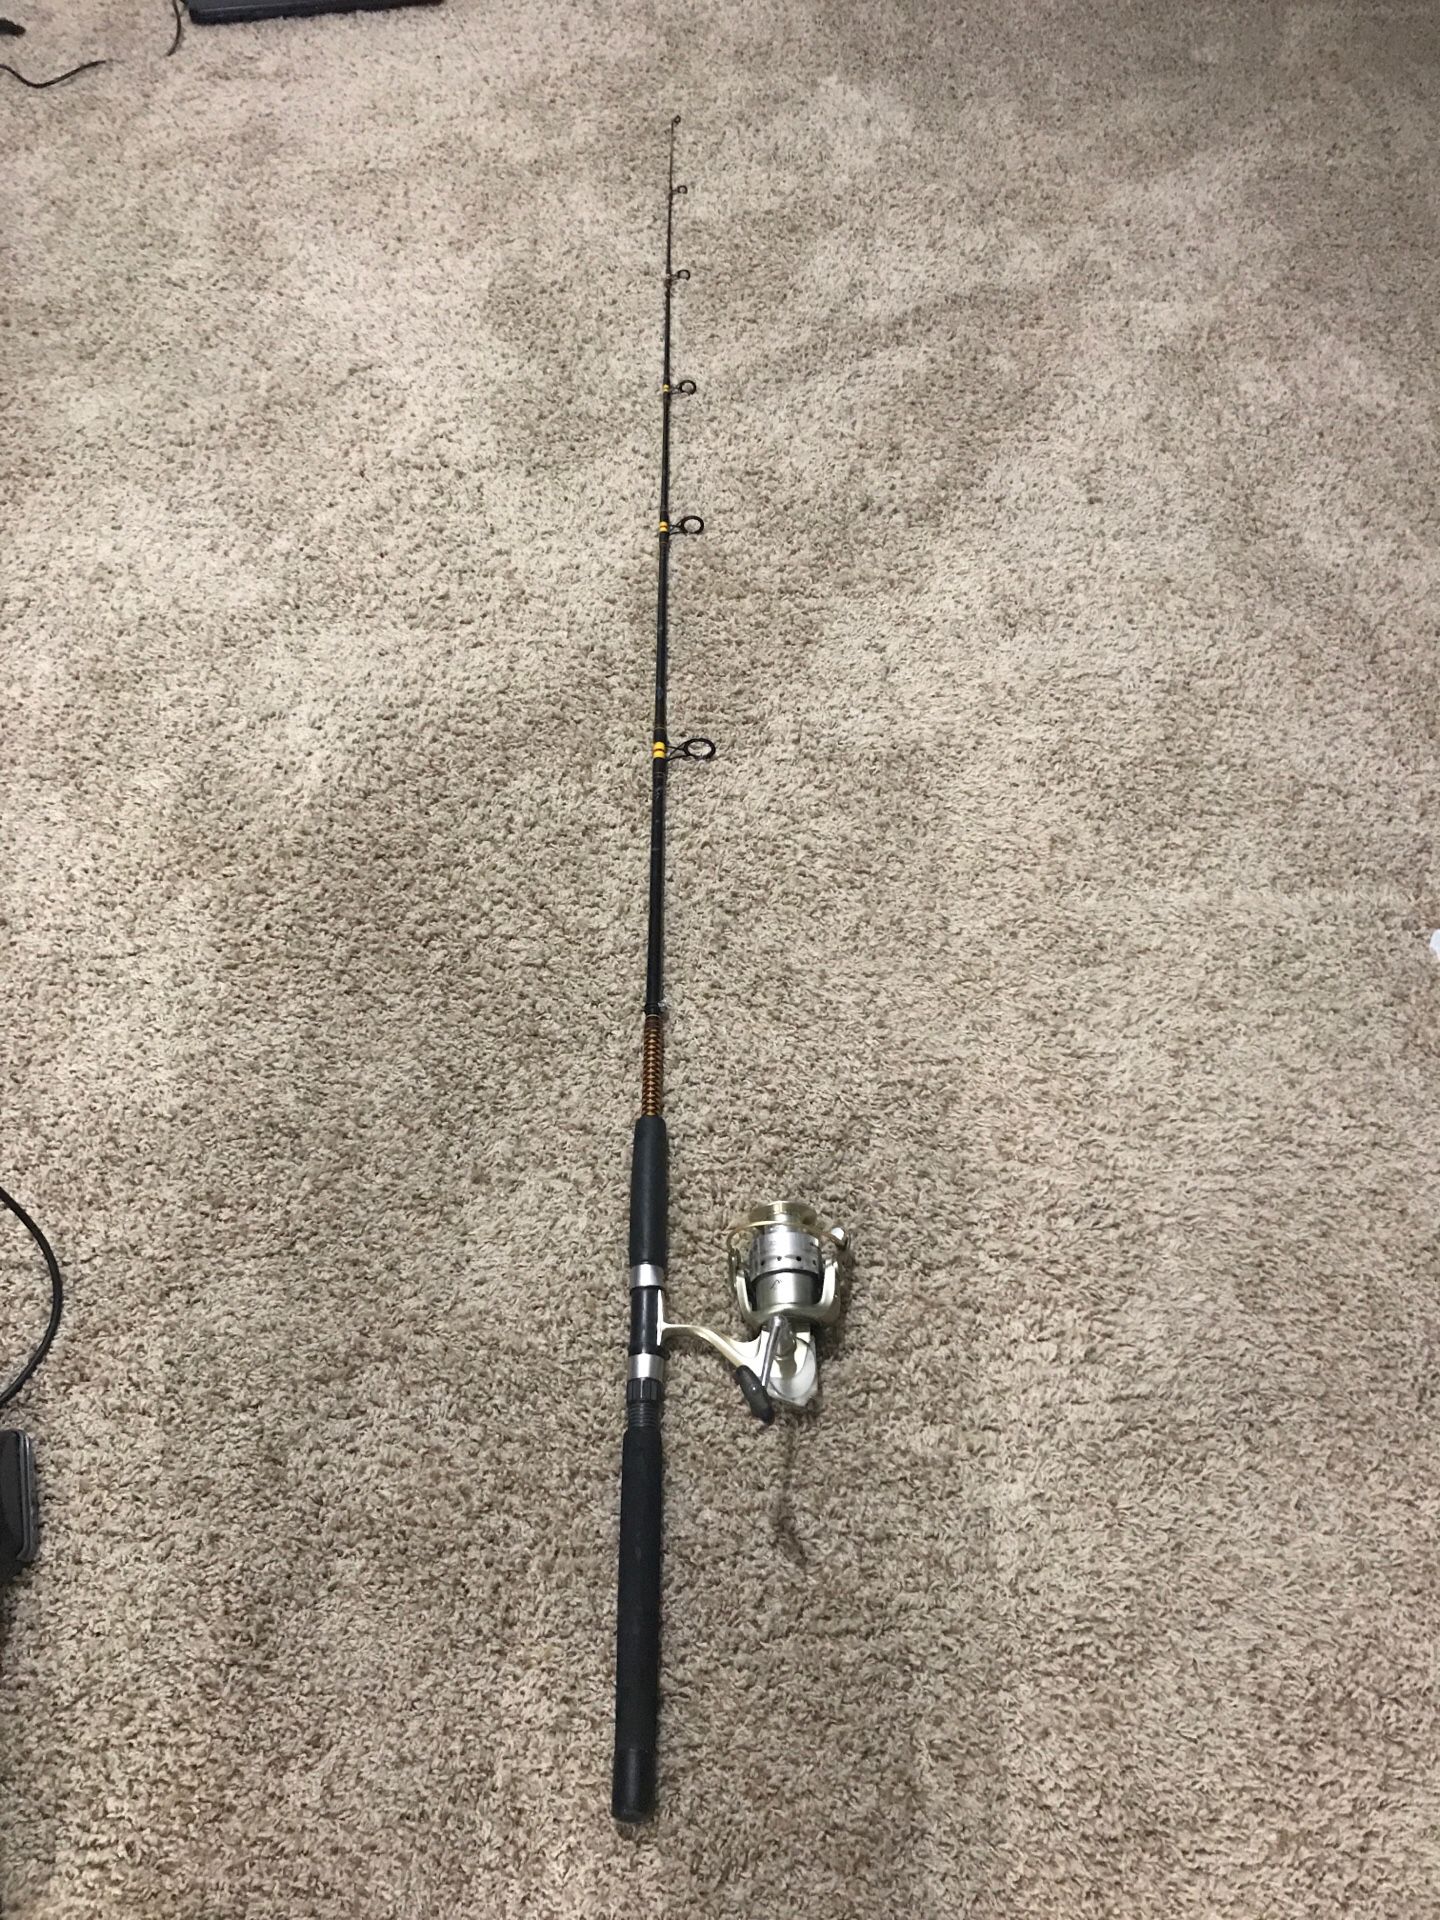 7 Foot Fishing Rod/Reel